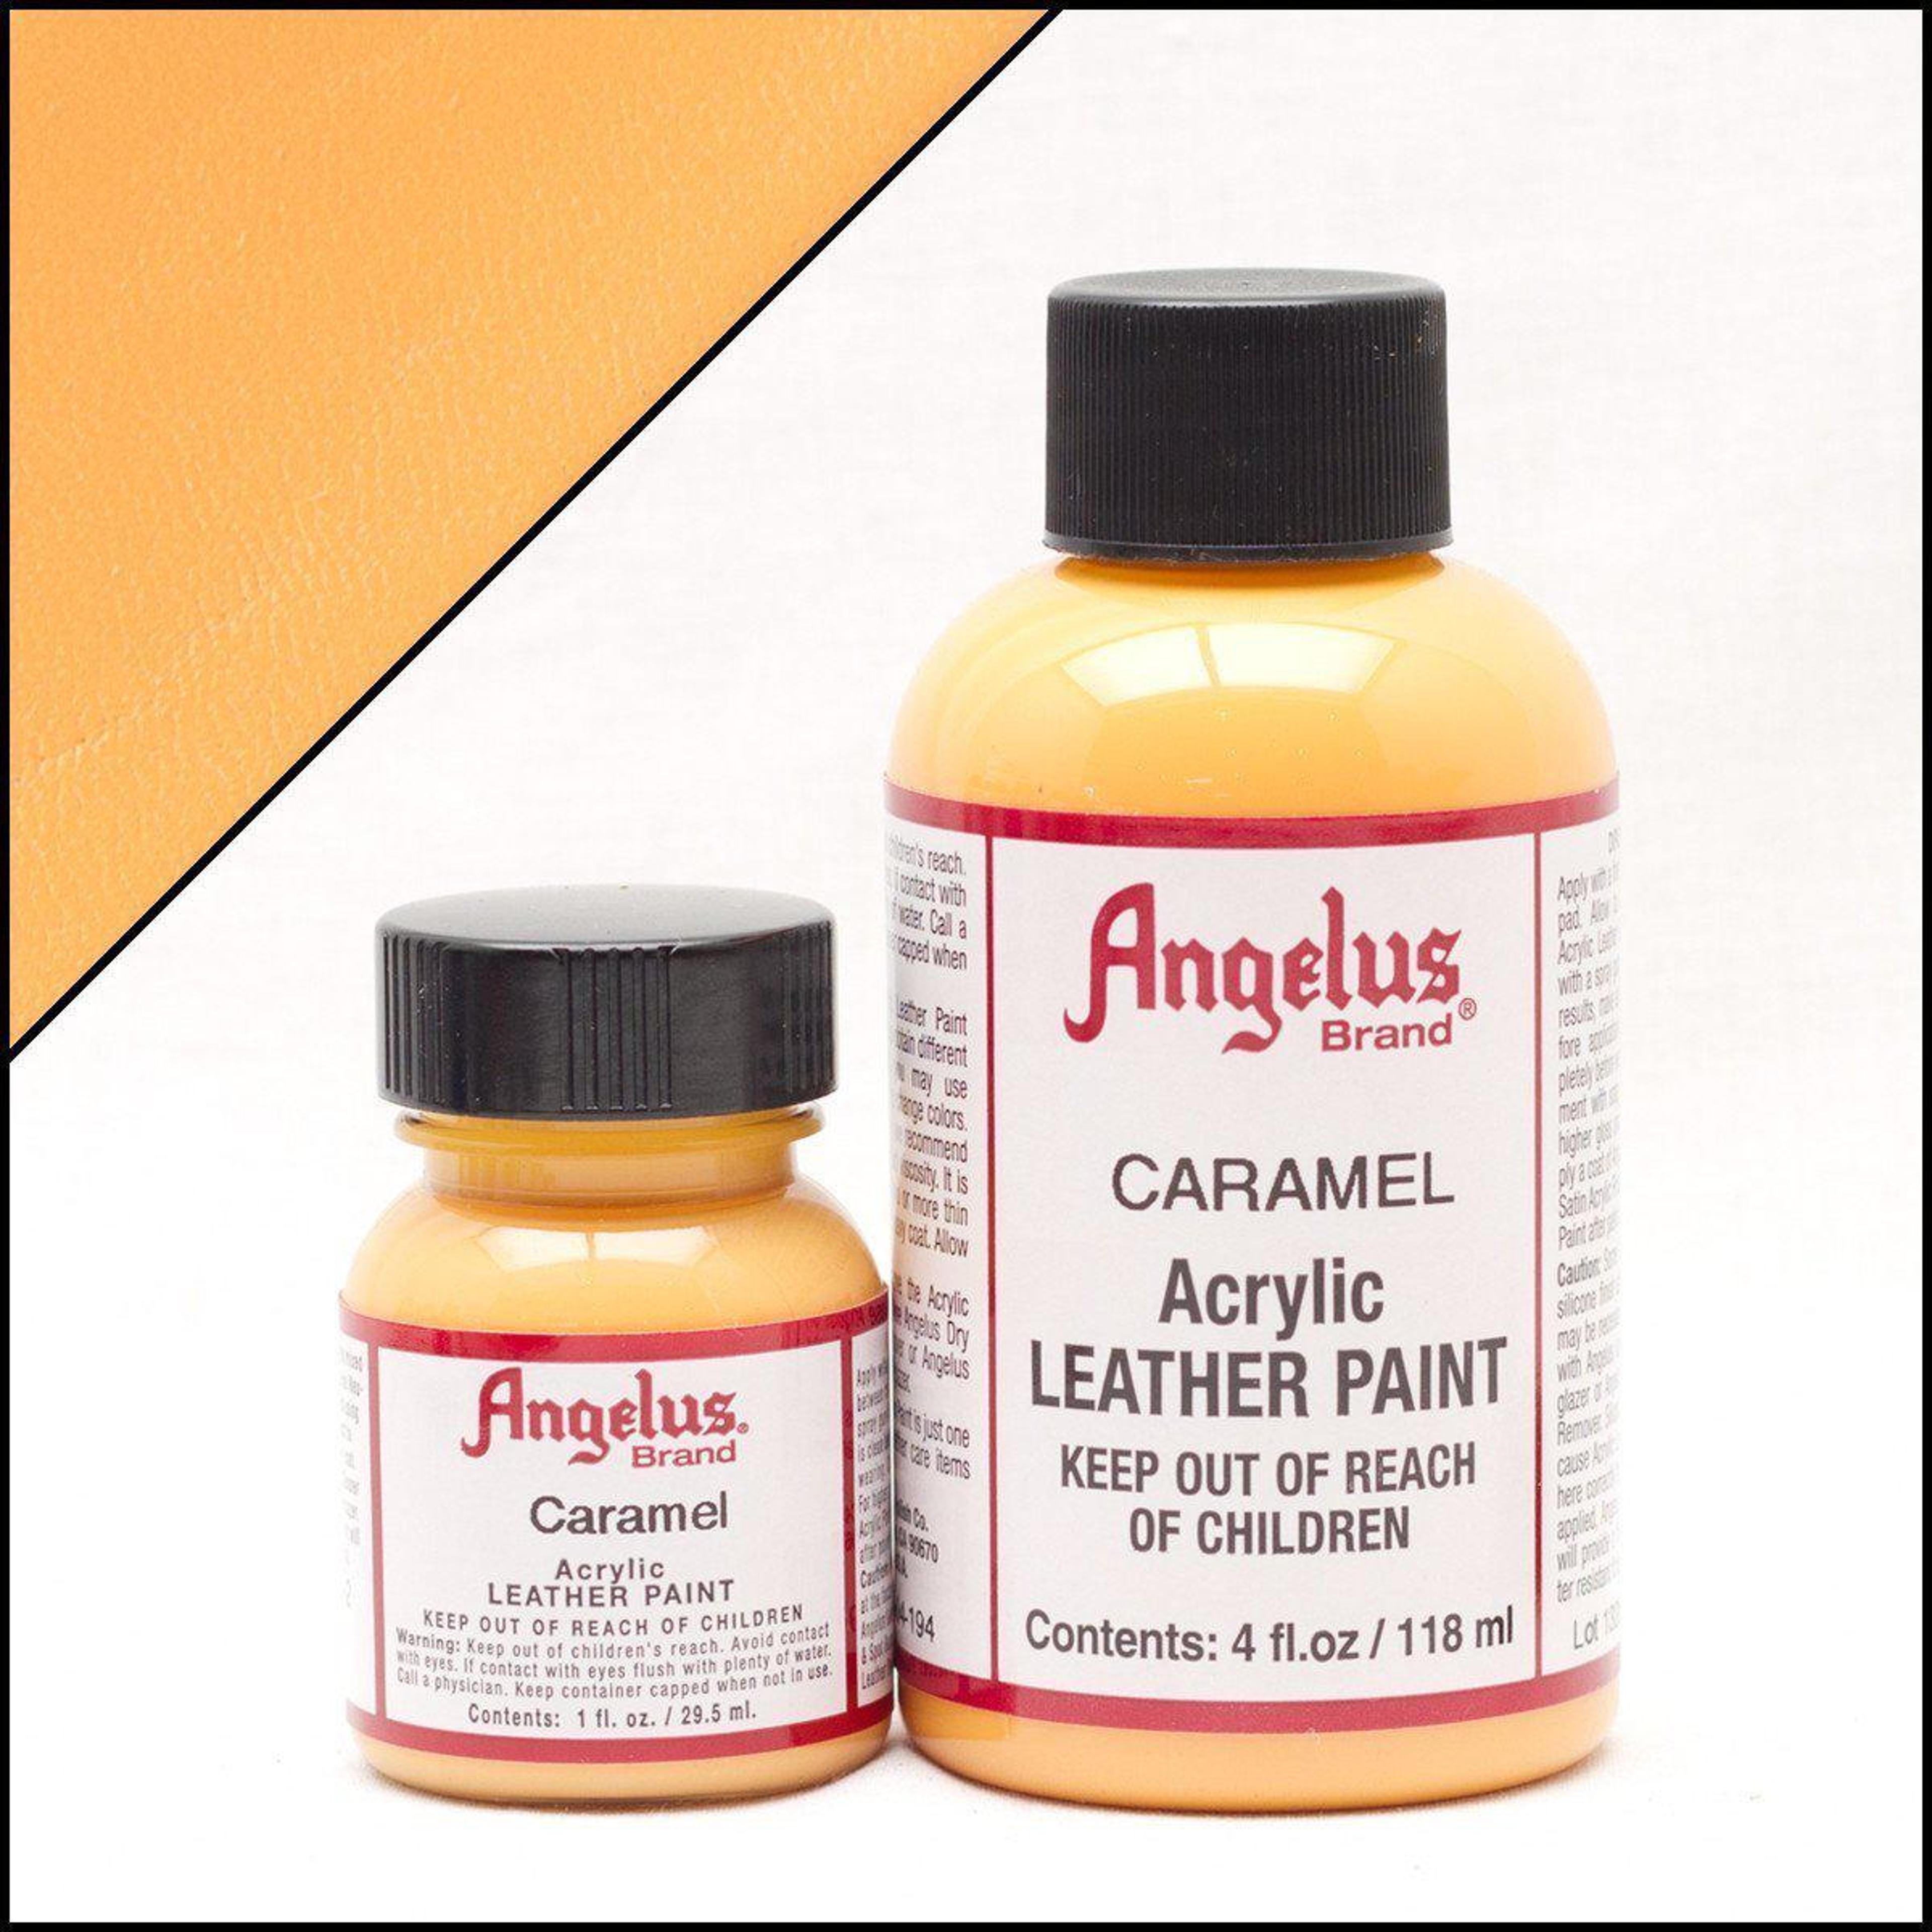 Angelus Preparer & Deglazer - 29.5 ml (1 oz.)